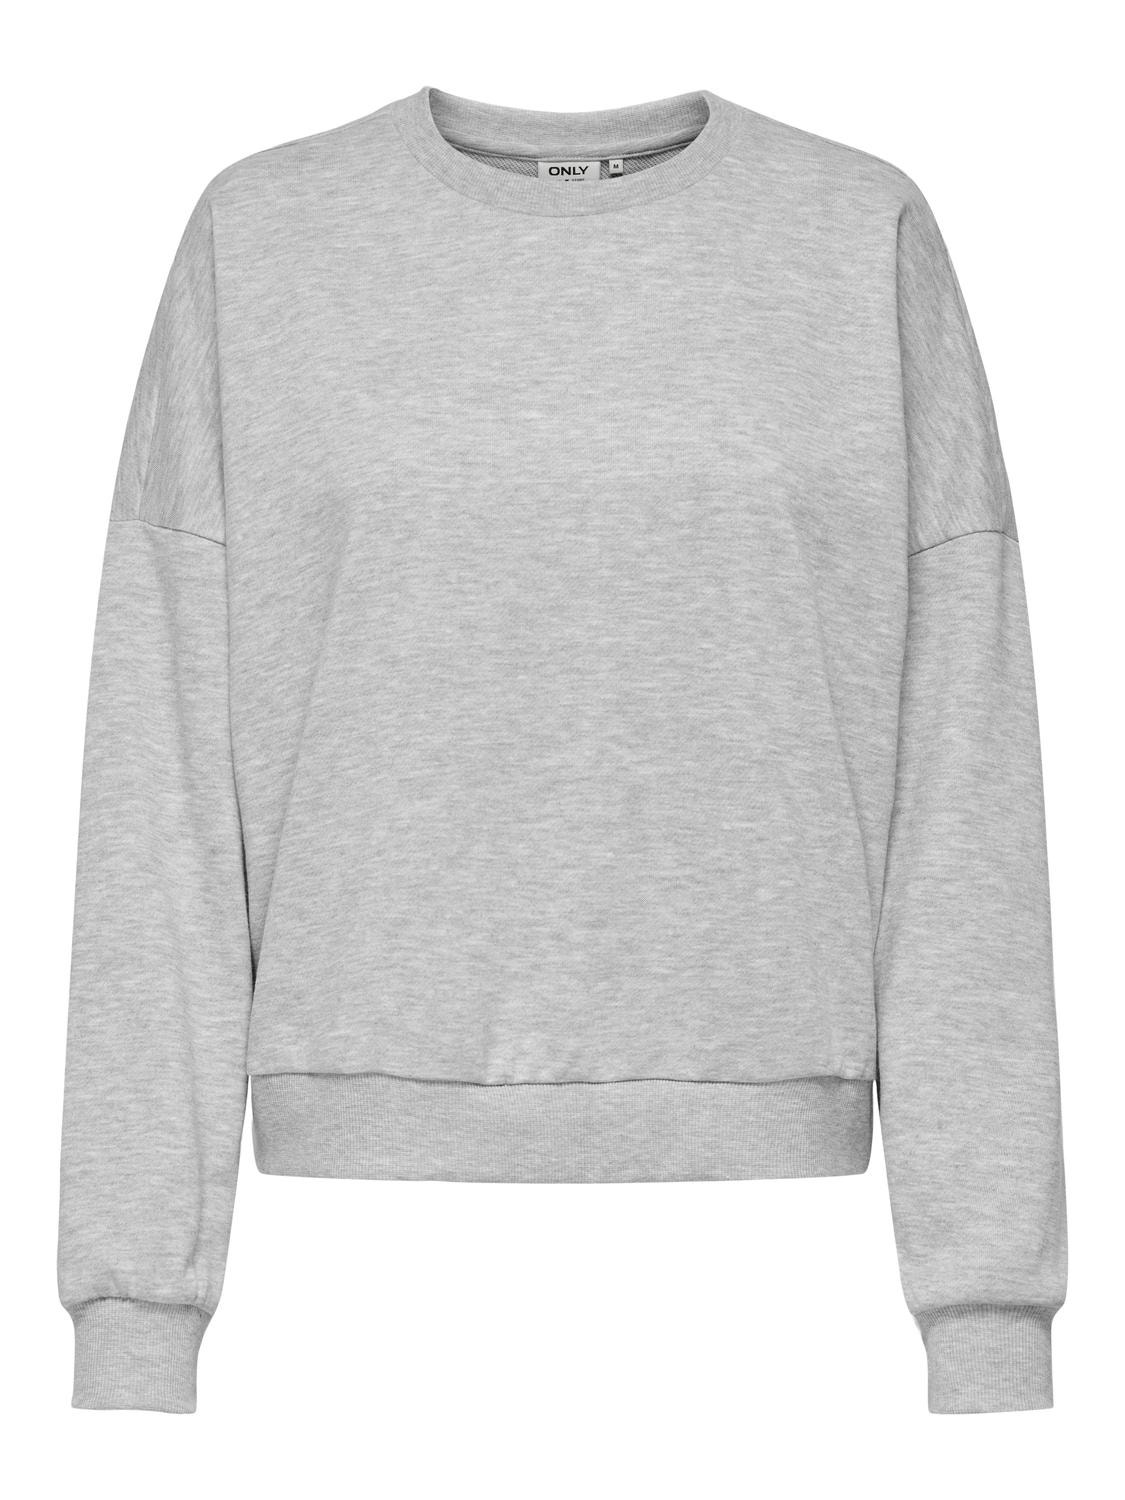 ONLY Normal geschnitten Rundhals Tief angesetzte Schulter Sweatshirt -Light Grey Melange - 15321400